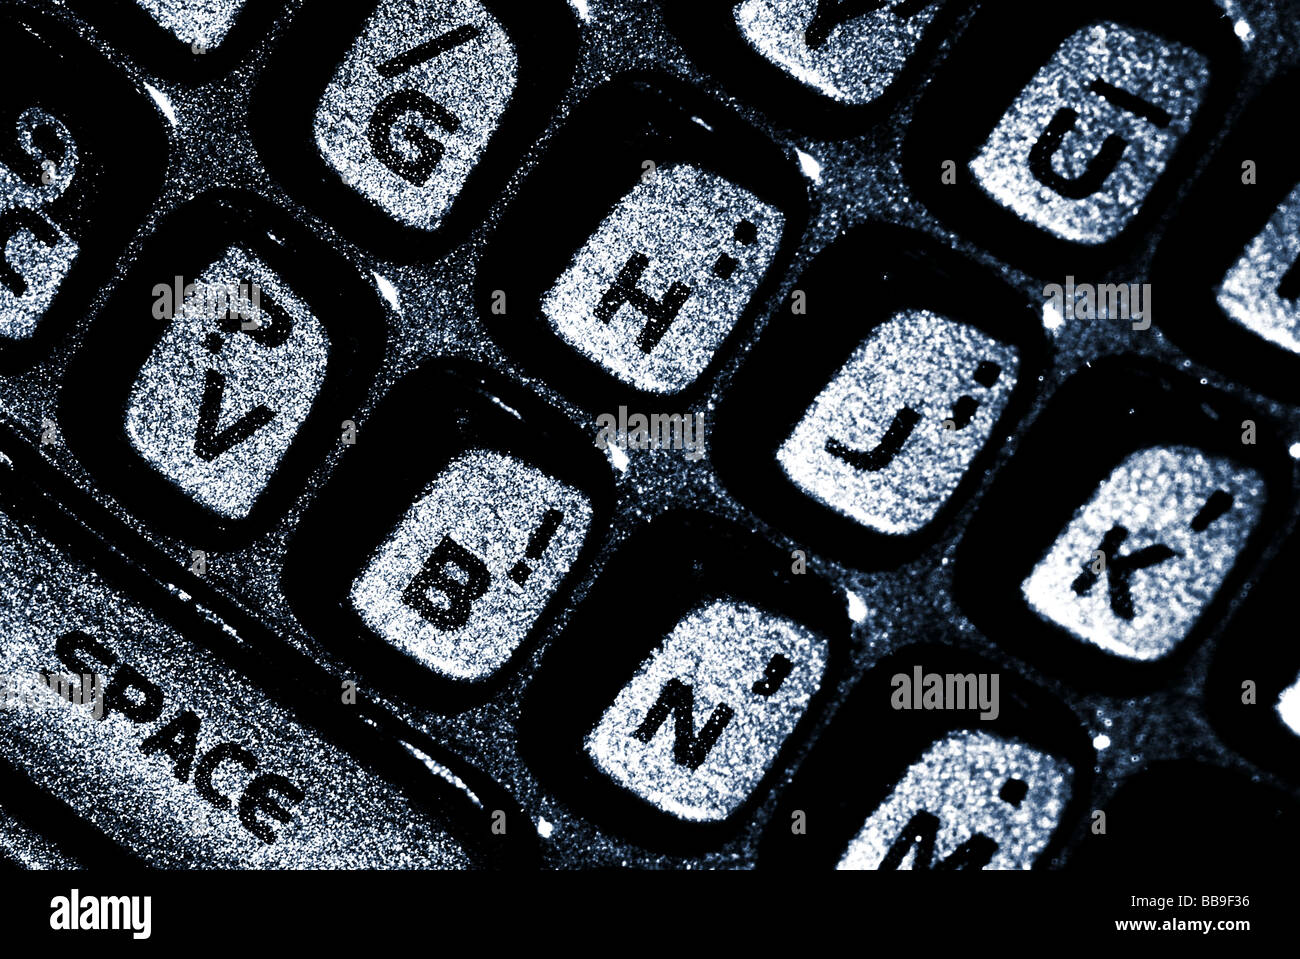 blackberry keyboard Stock Photo